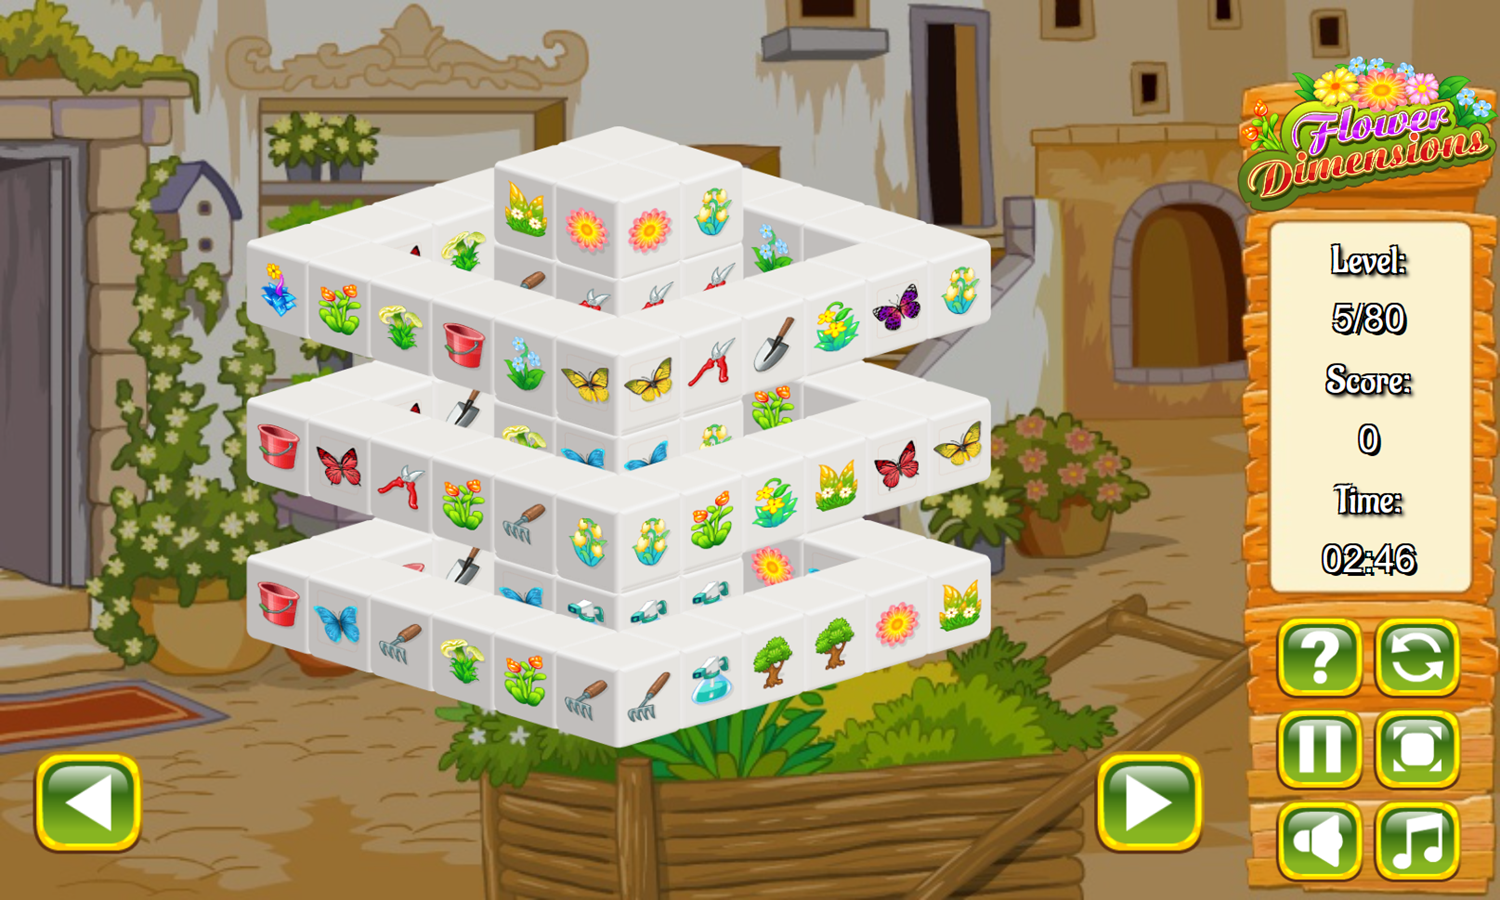 Flower Dimensions Game Level Progress Screenshot.